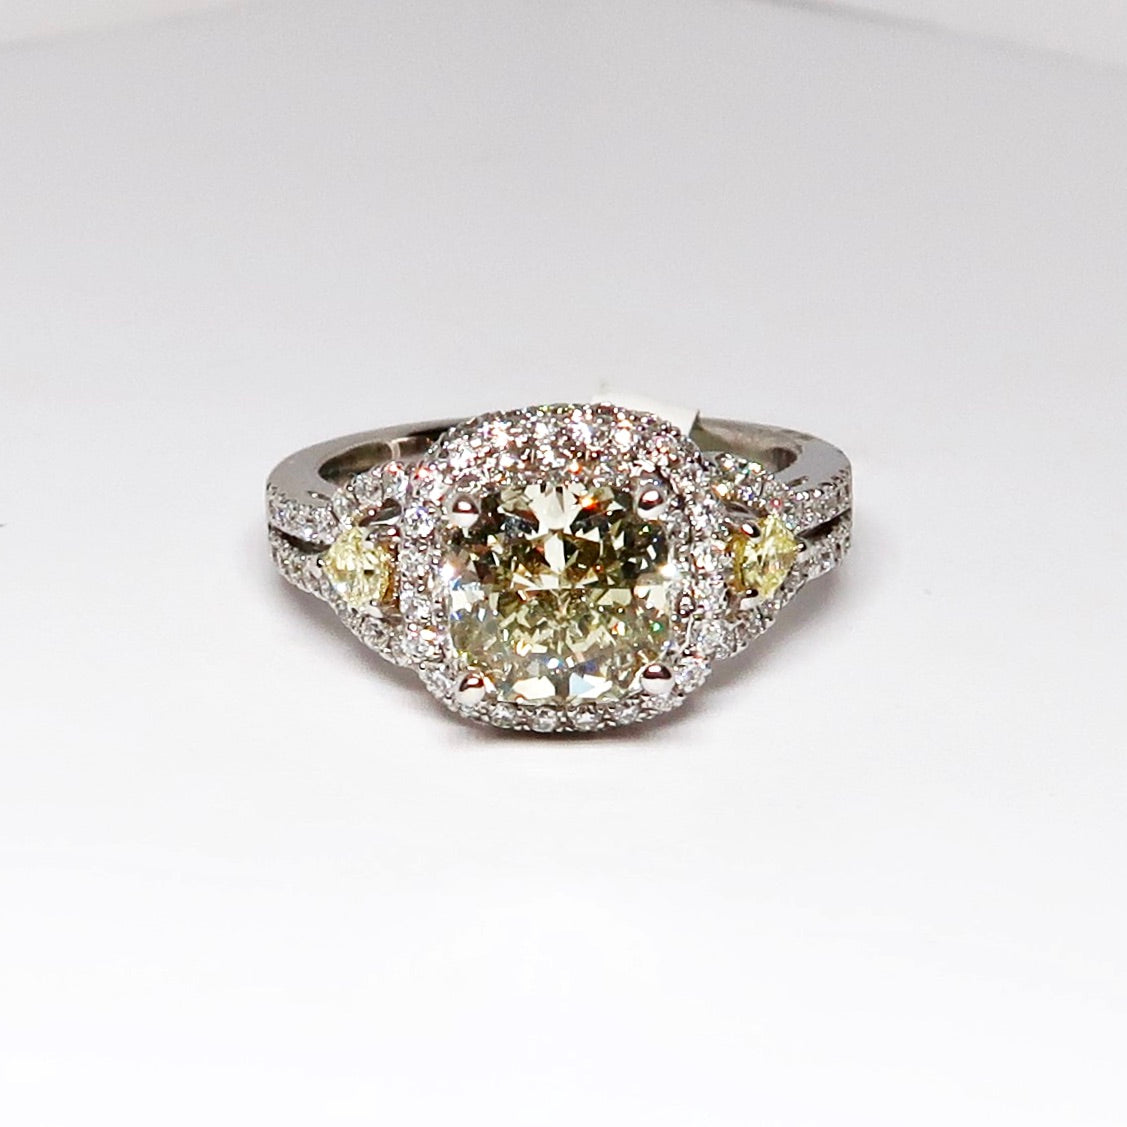 18k White Gold Diamond Ring, Cushion Cut, Fancy Yellow Diamond